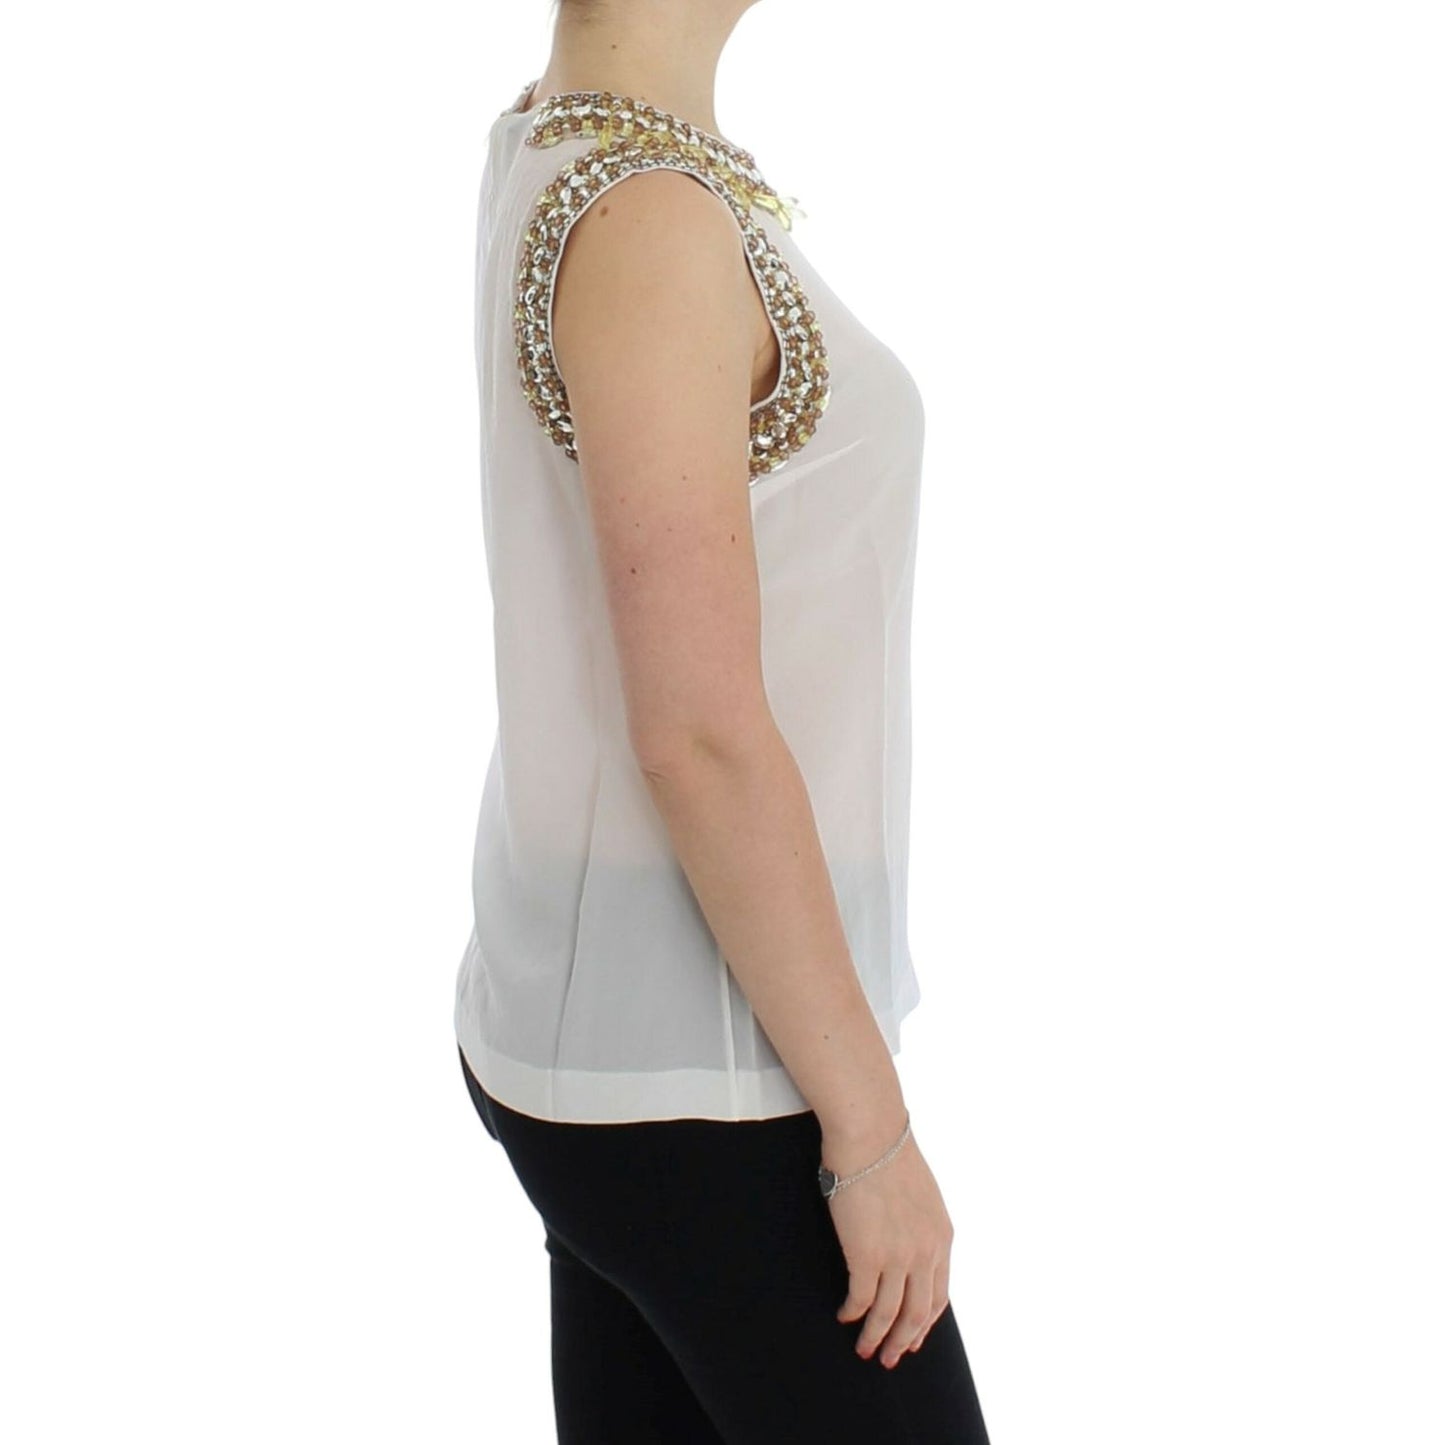 Dolce & Gabbana Elegant Sleeveless Silk Blouse with Crystal Embellishment white-crystal-embellished-tank-top